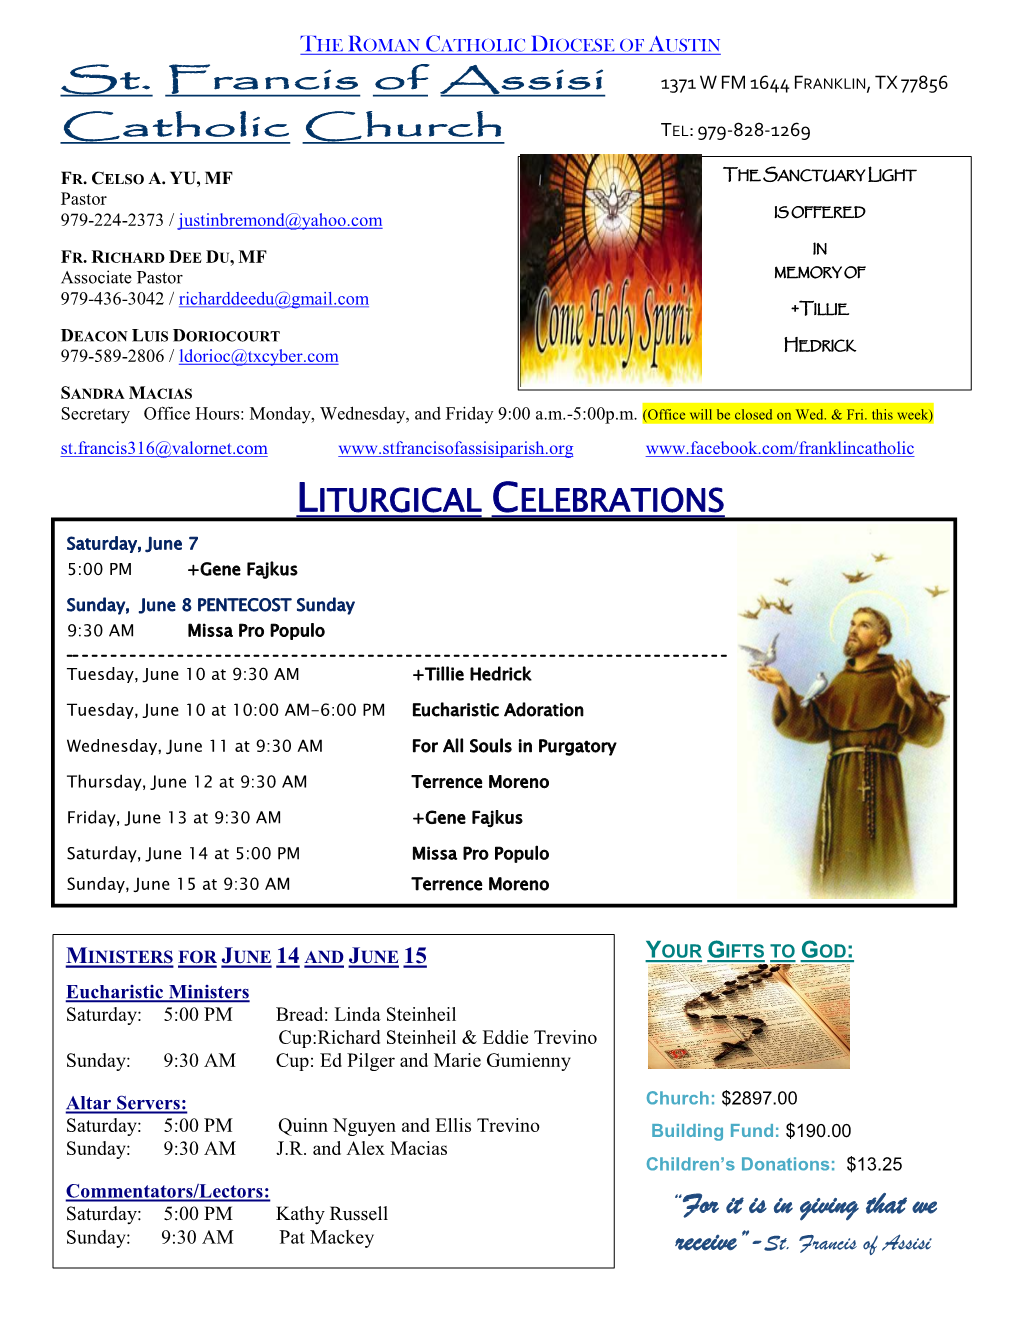 Liturgical Celebrations